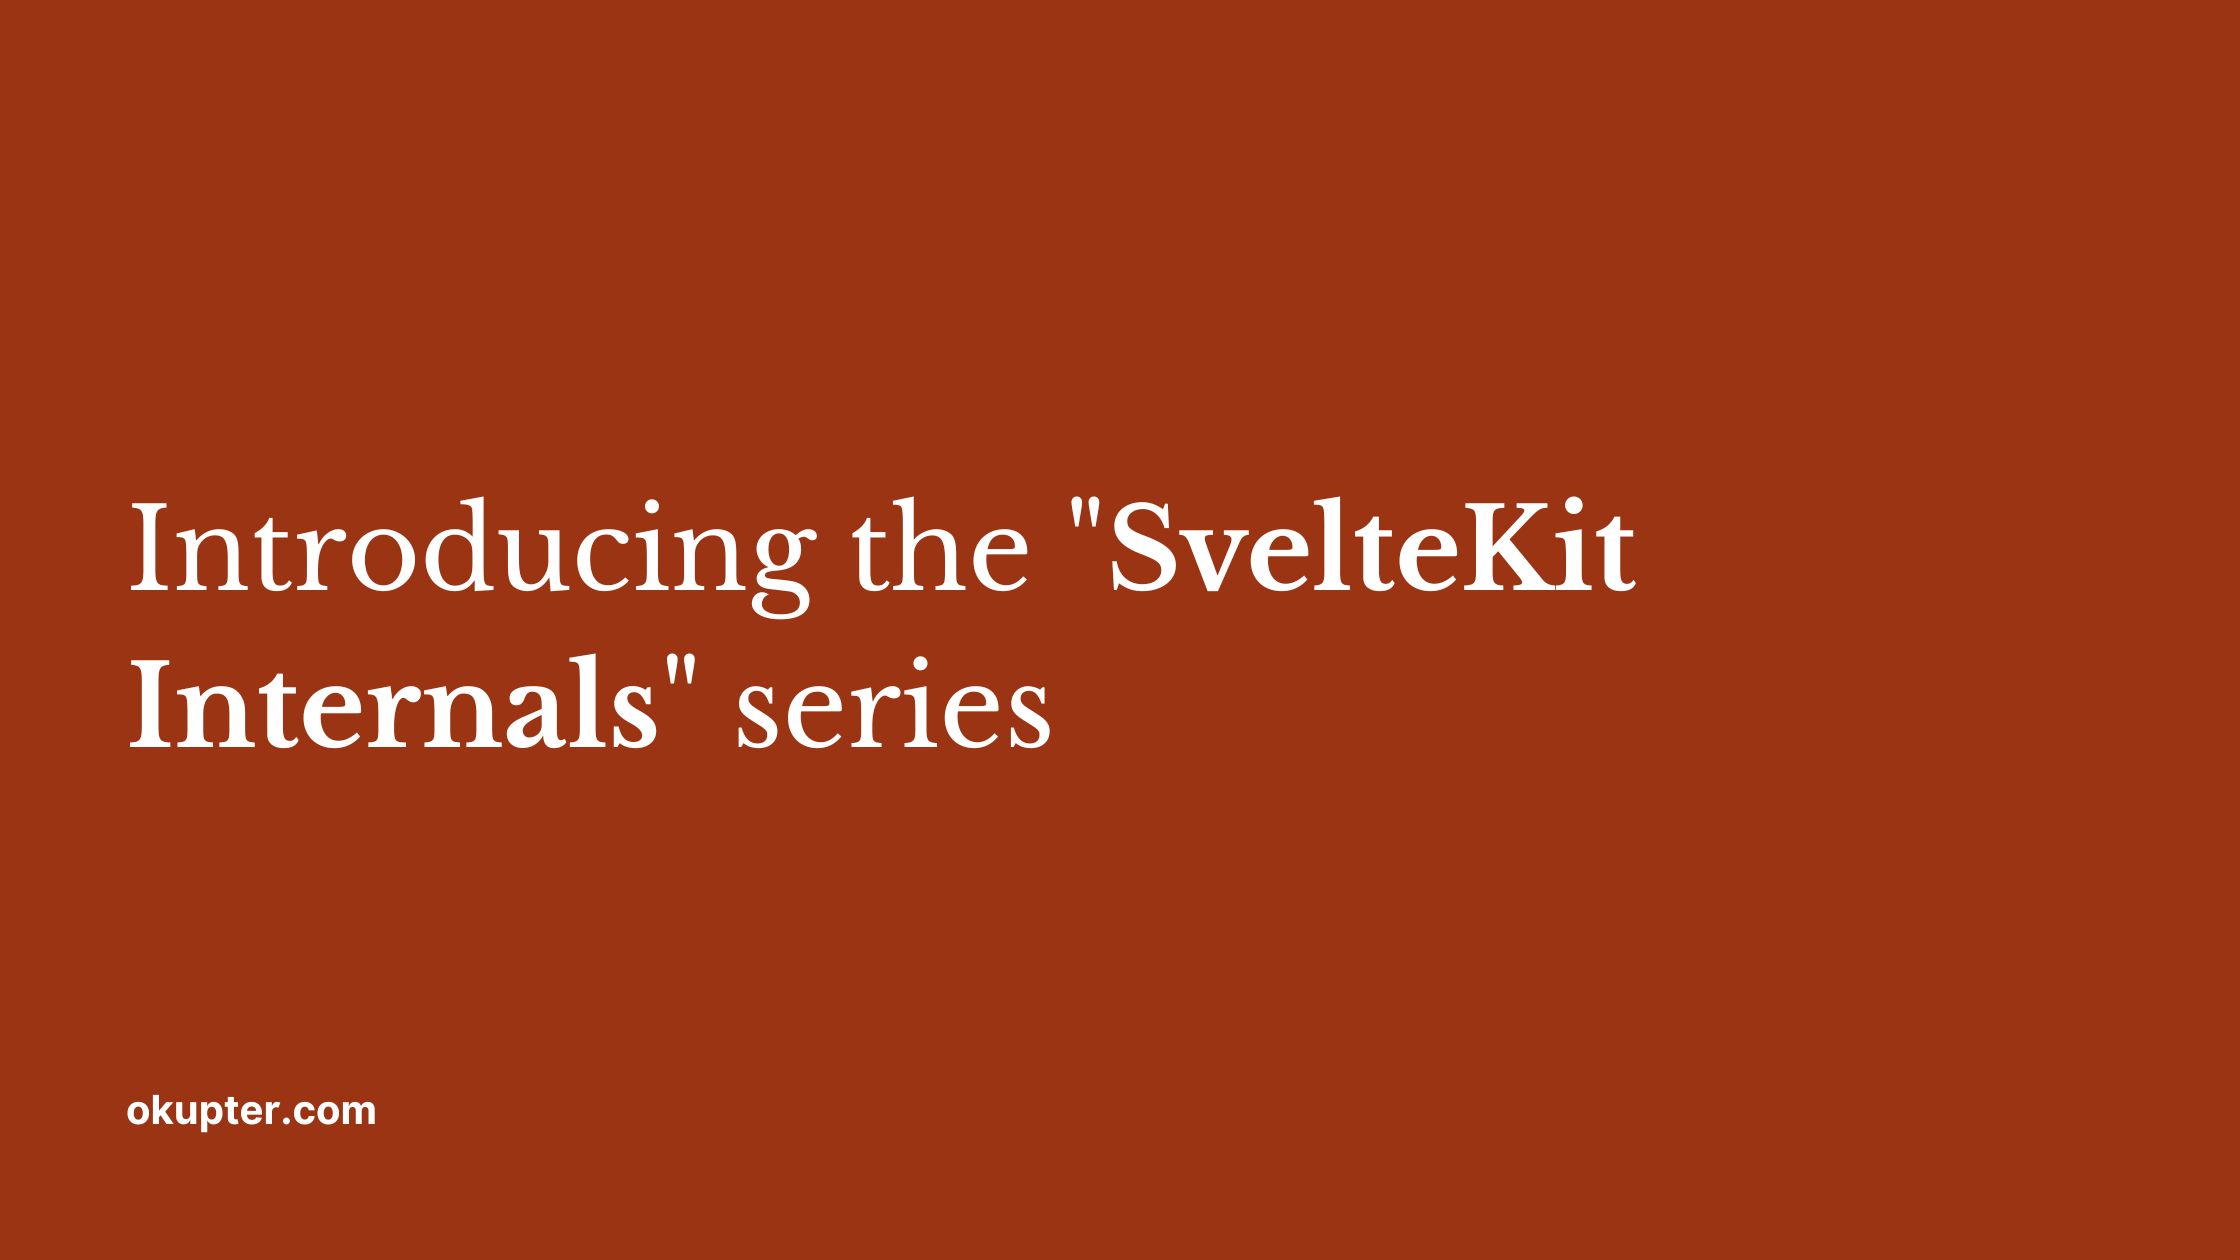 Introducing the "SvelteKit Internals" series